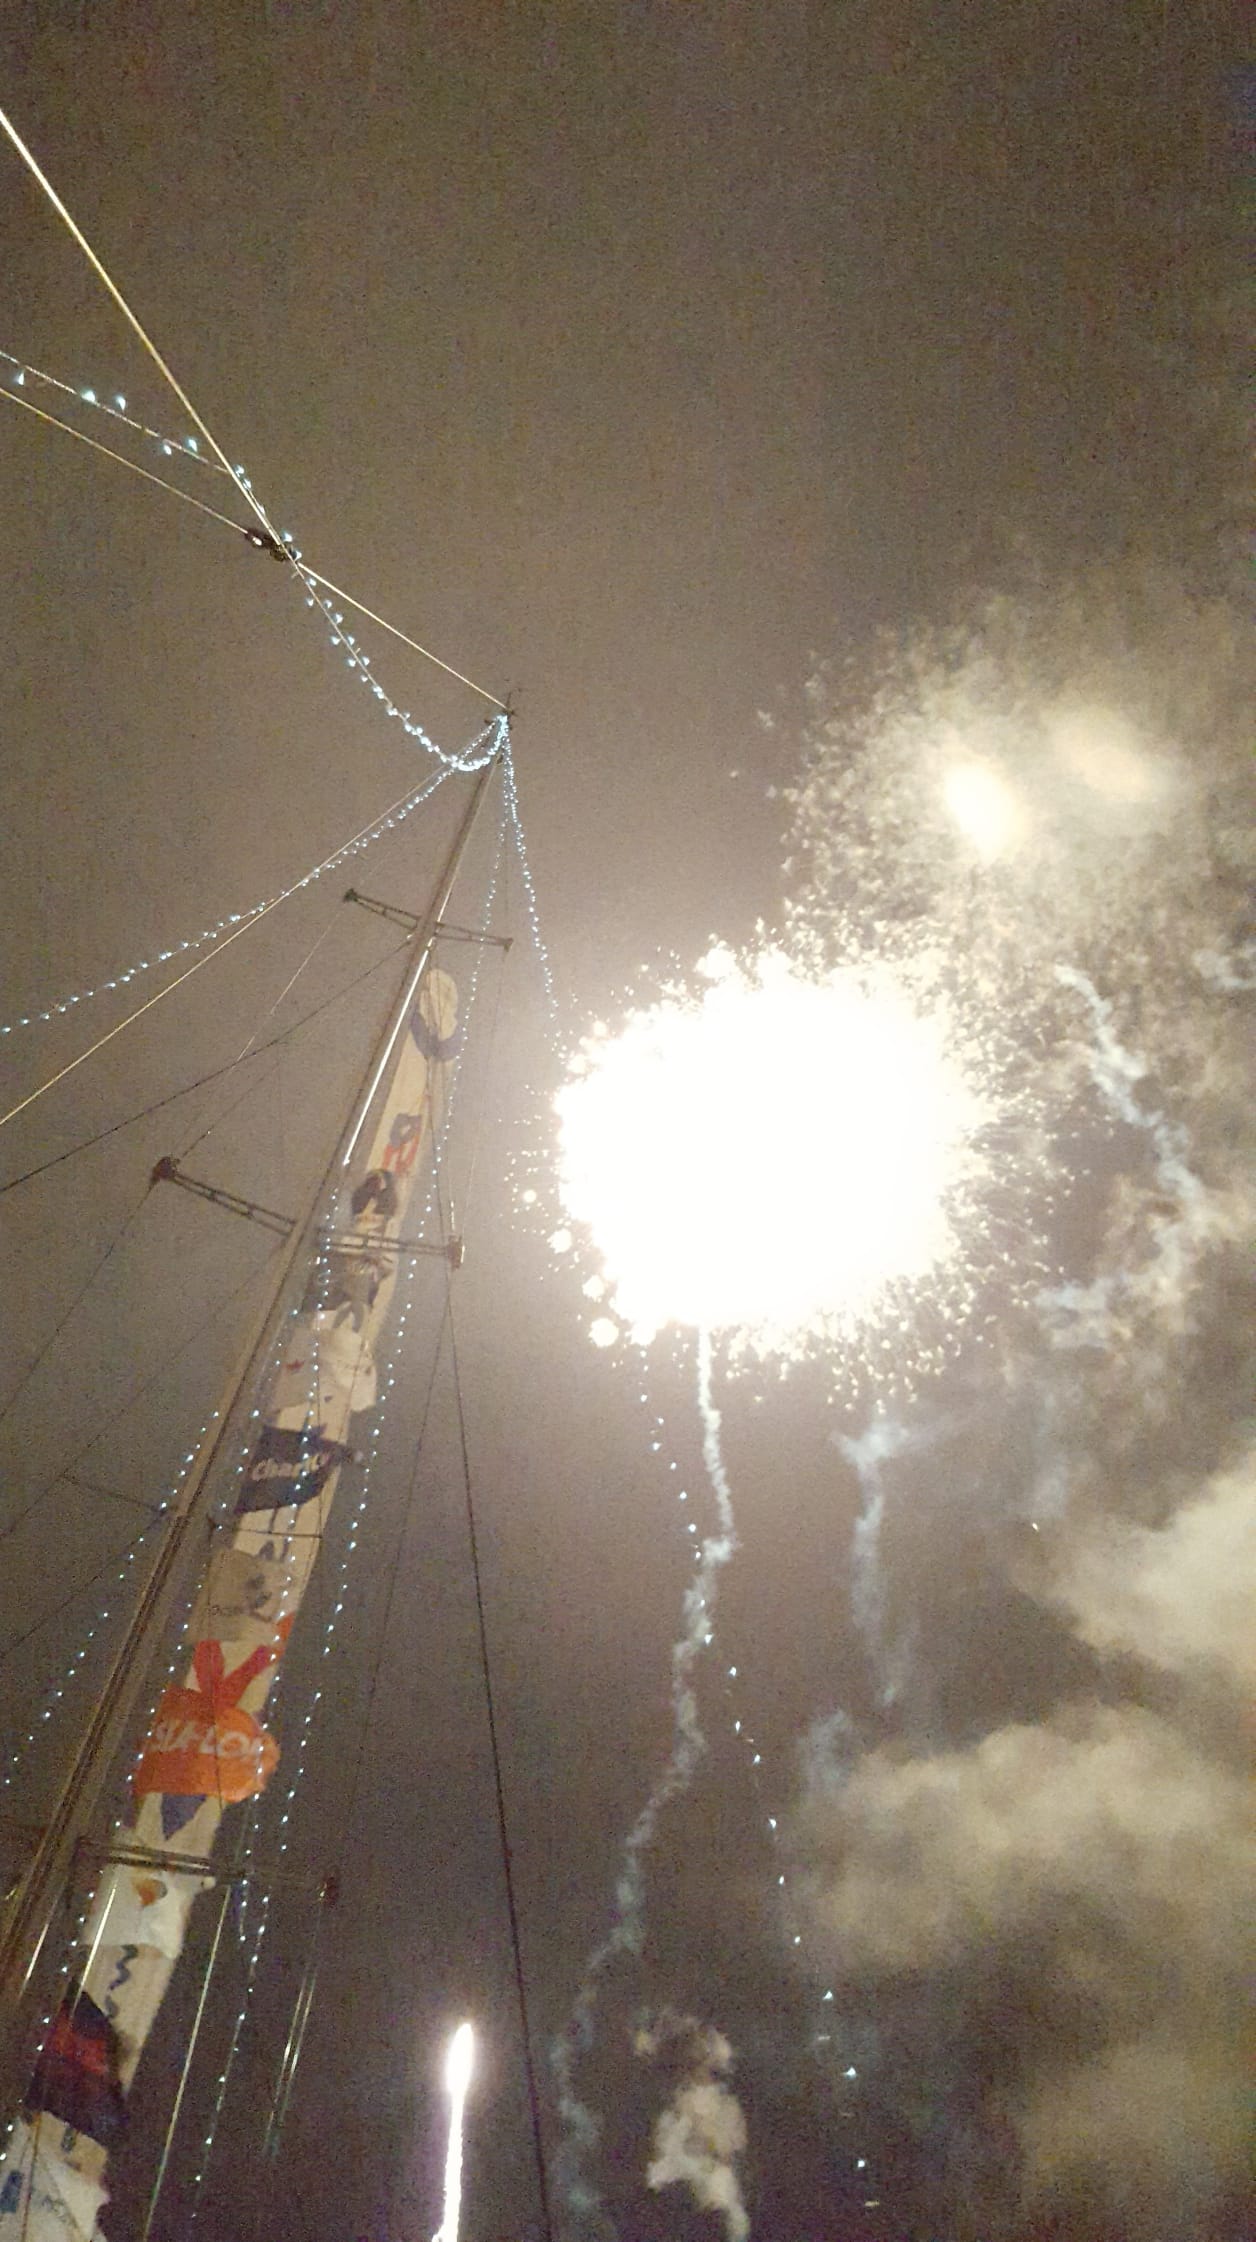 fireworks-2